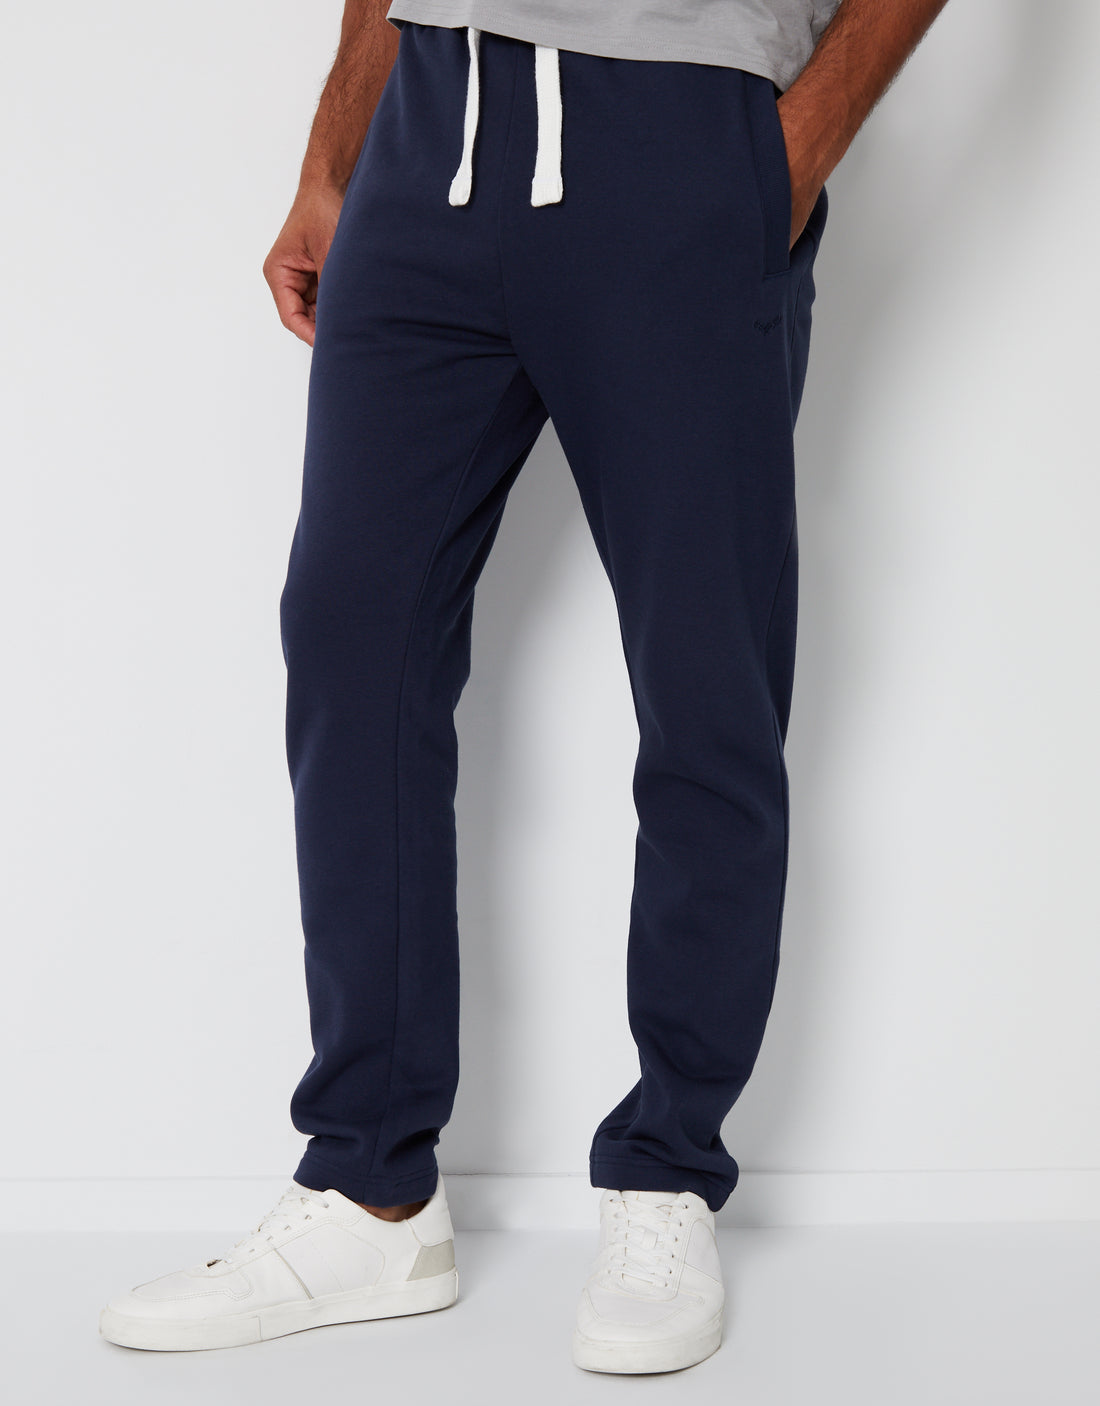  Navy Blue Sweatpants